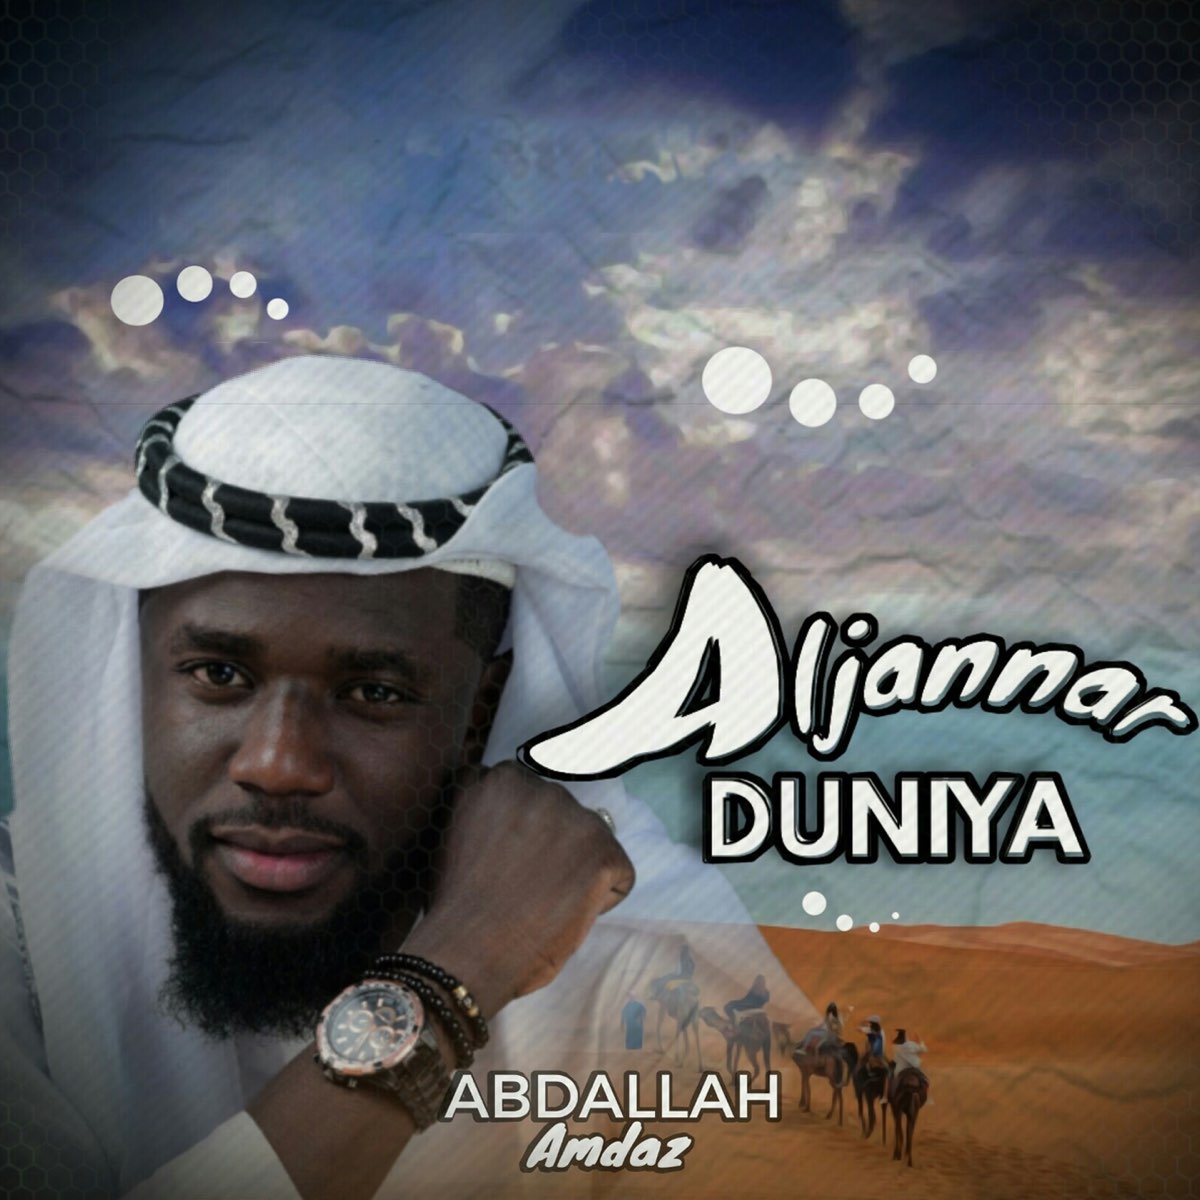 Aljannar Duniya - Single by Abdallah Amdaz on Apple Music